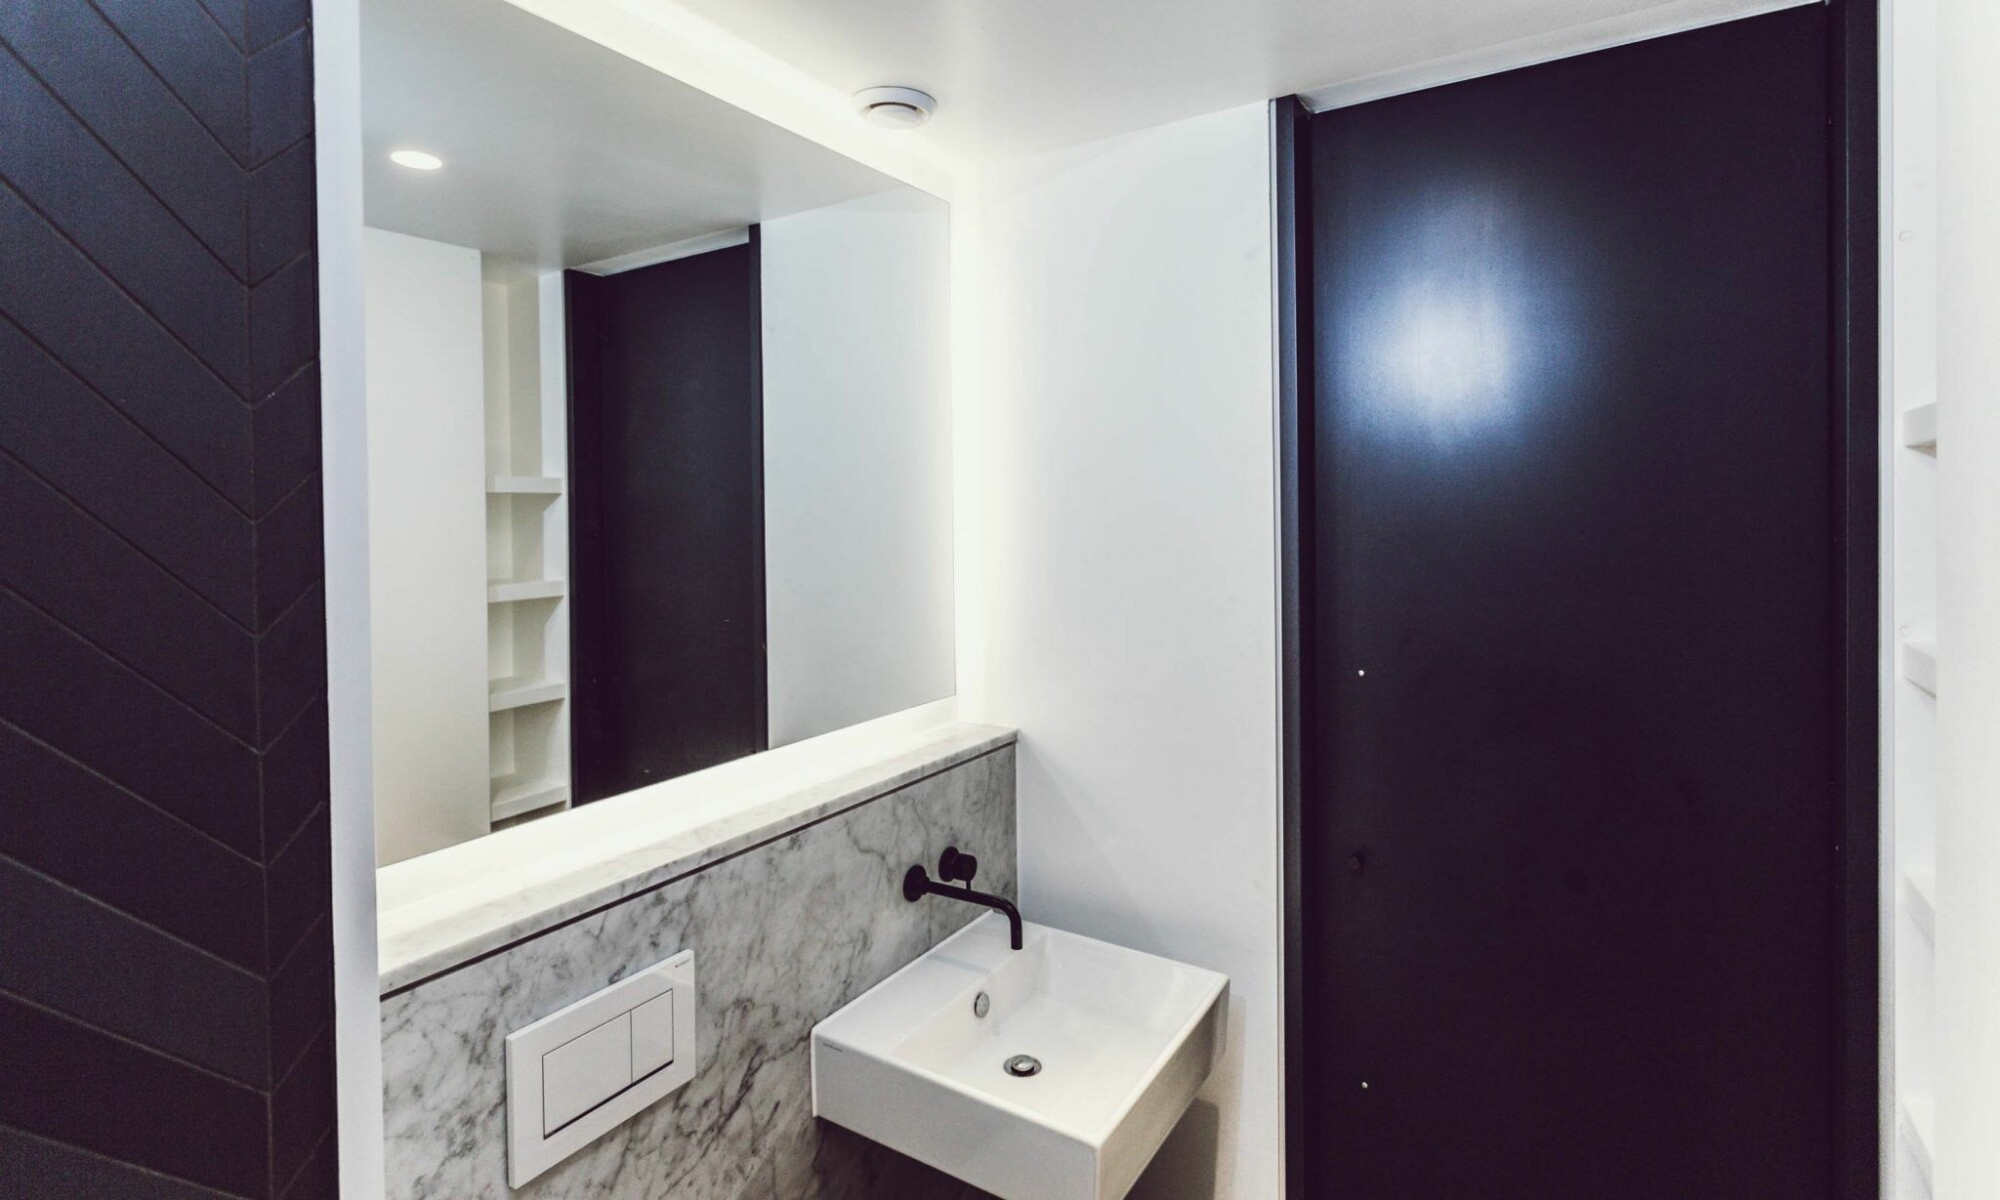 Luxury Bathroom Renovation